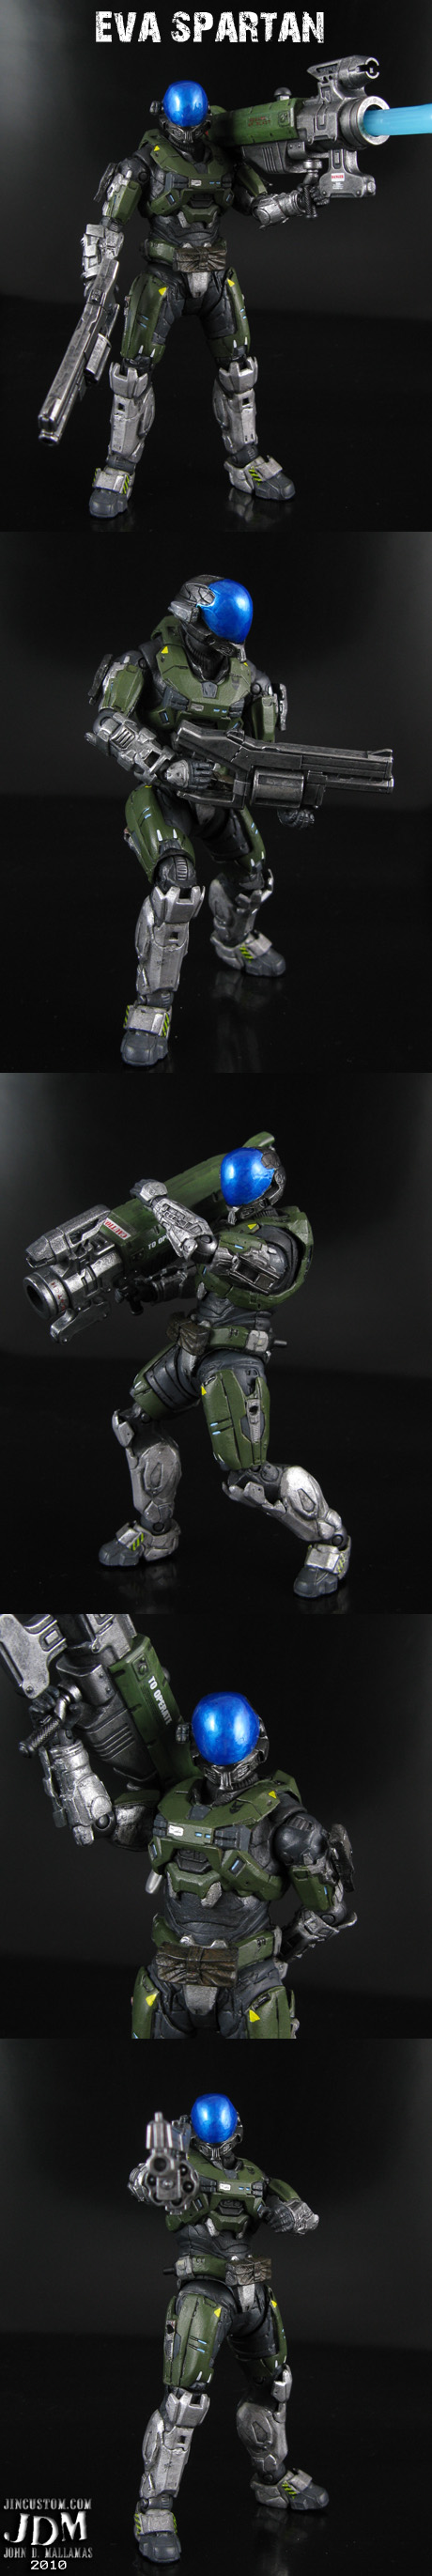 halo reach eva armor